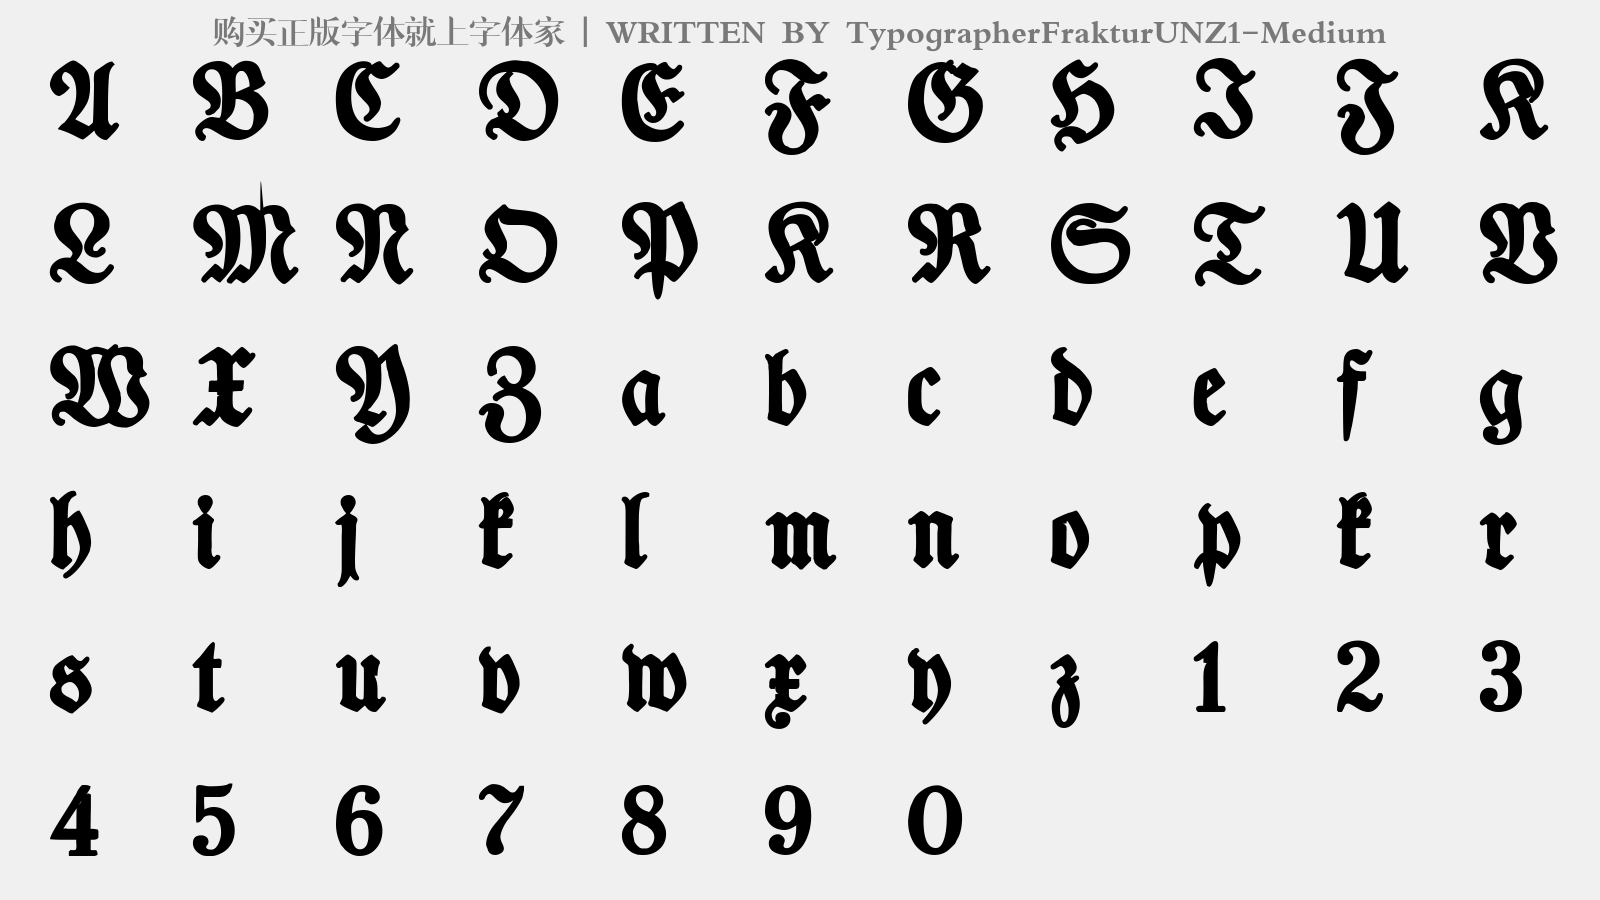 TypographerFrakturUNZ1-Medium - 大写字母/小写字母/数字